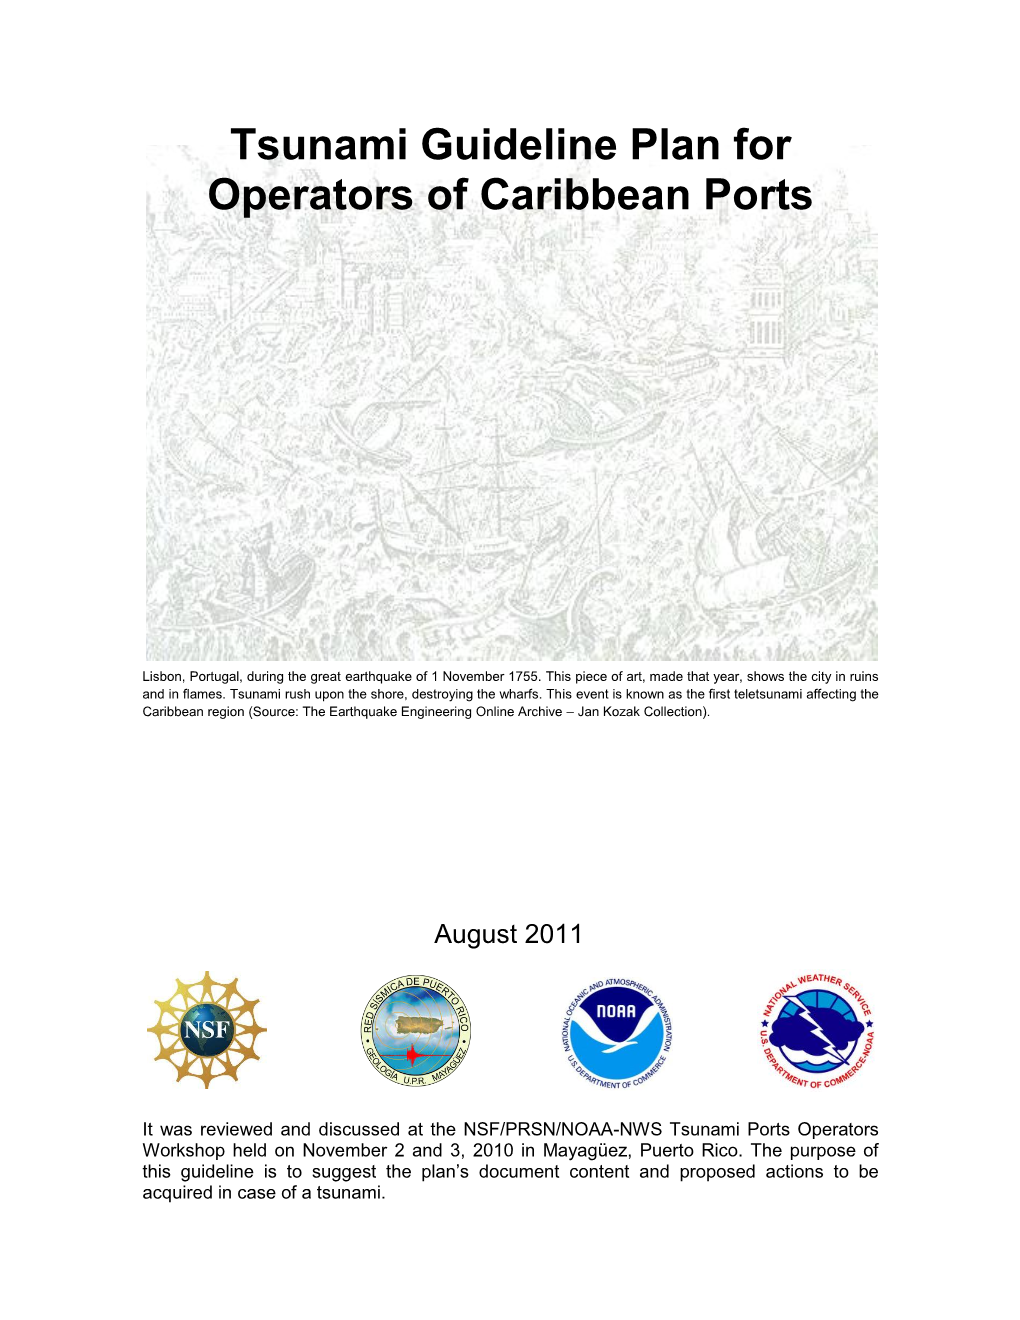 Tsunami Guideline Plan for Operators of Caribbean Ports